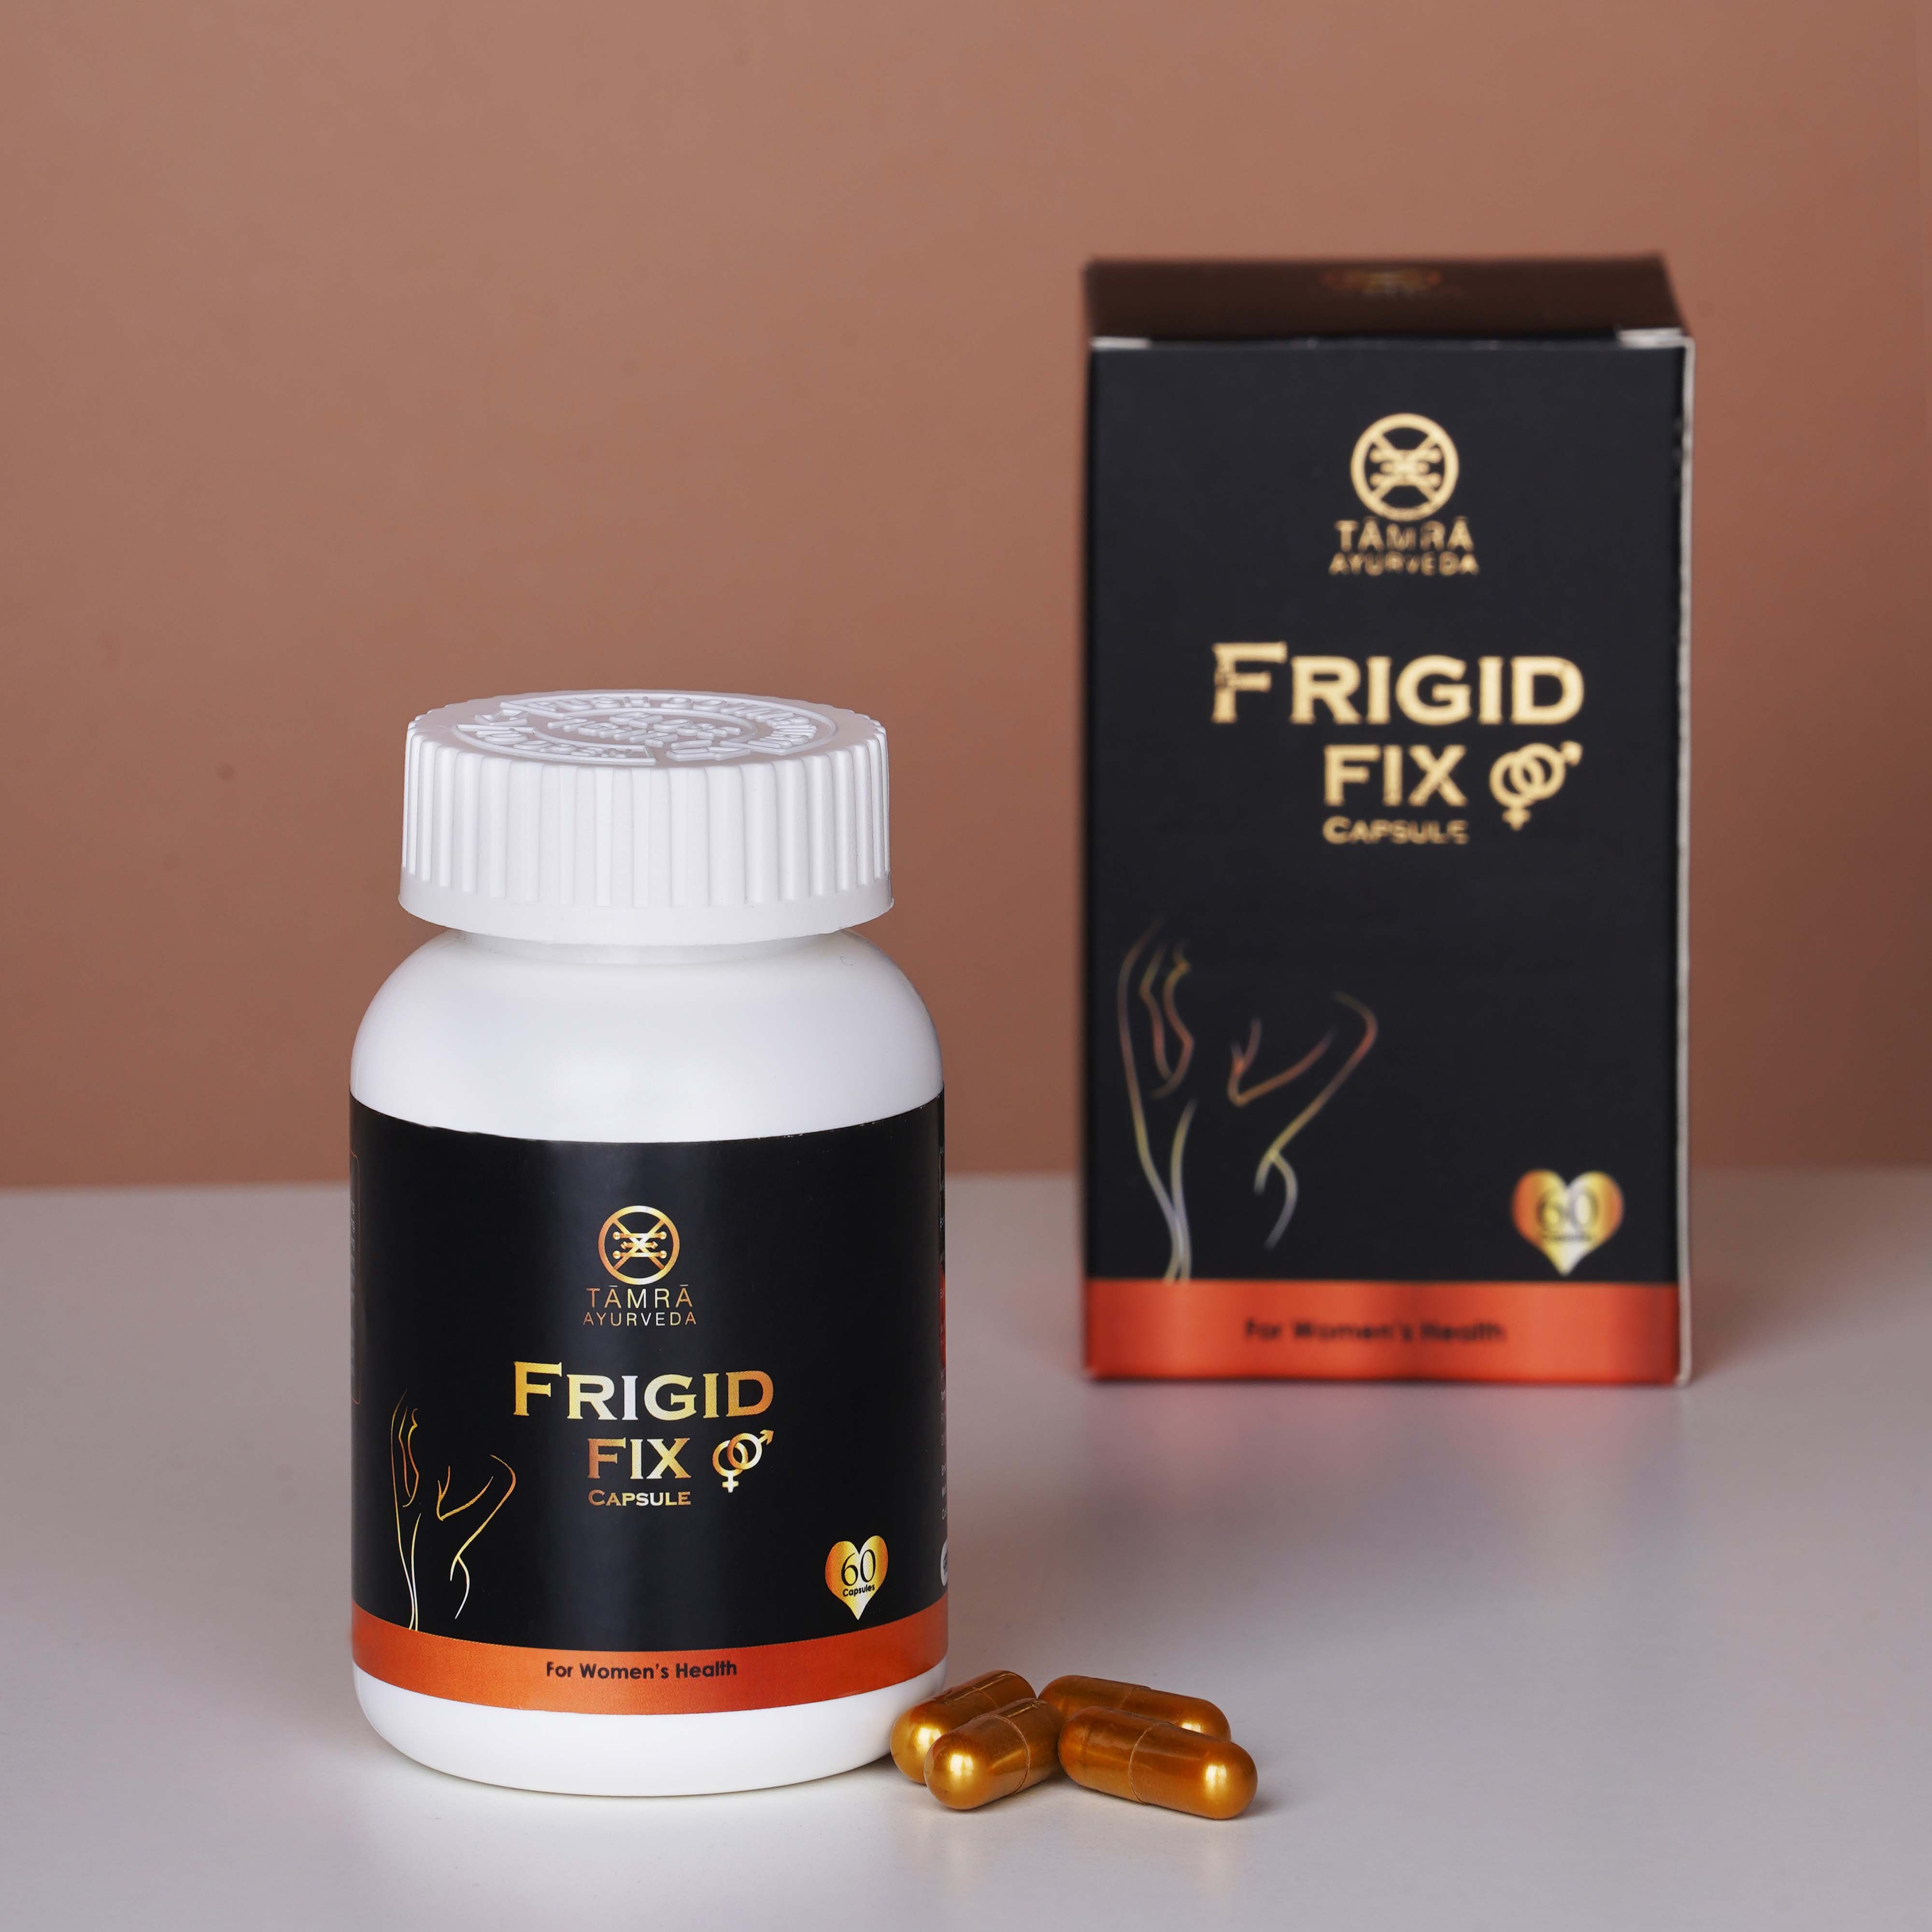 Frigidfix capsule–To increase fertility & overall health in females